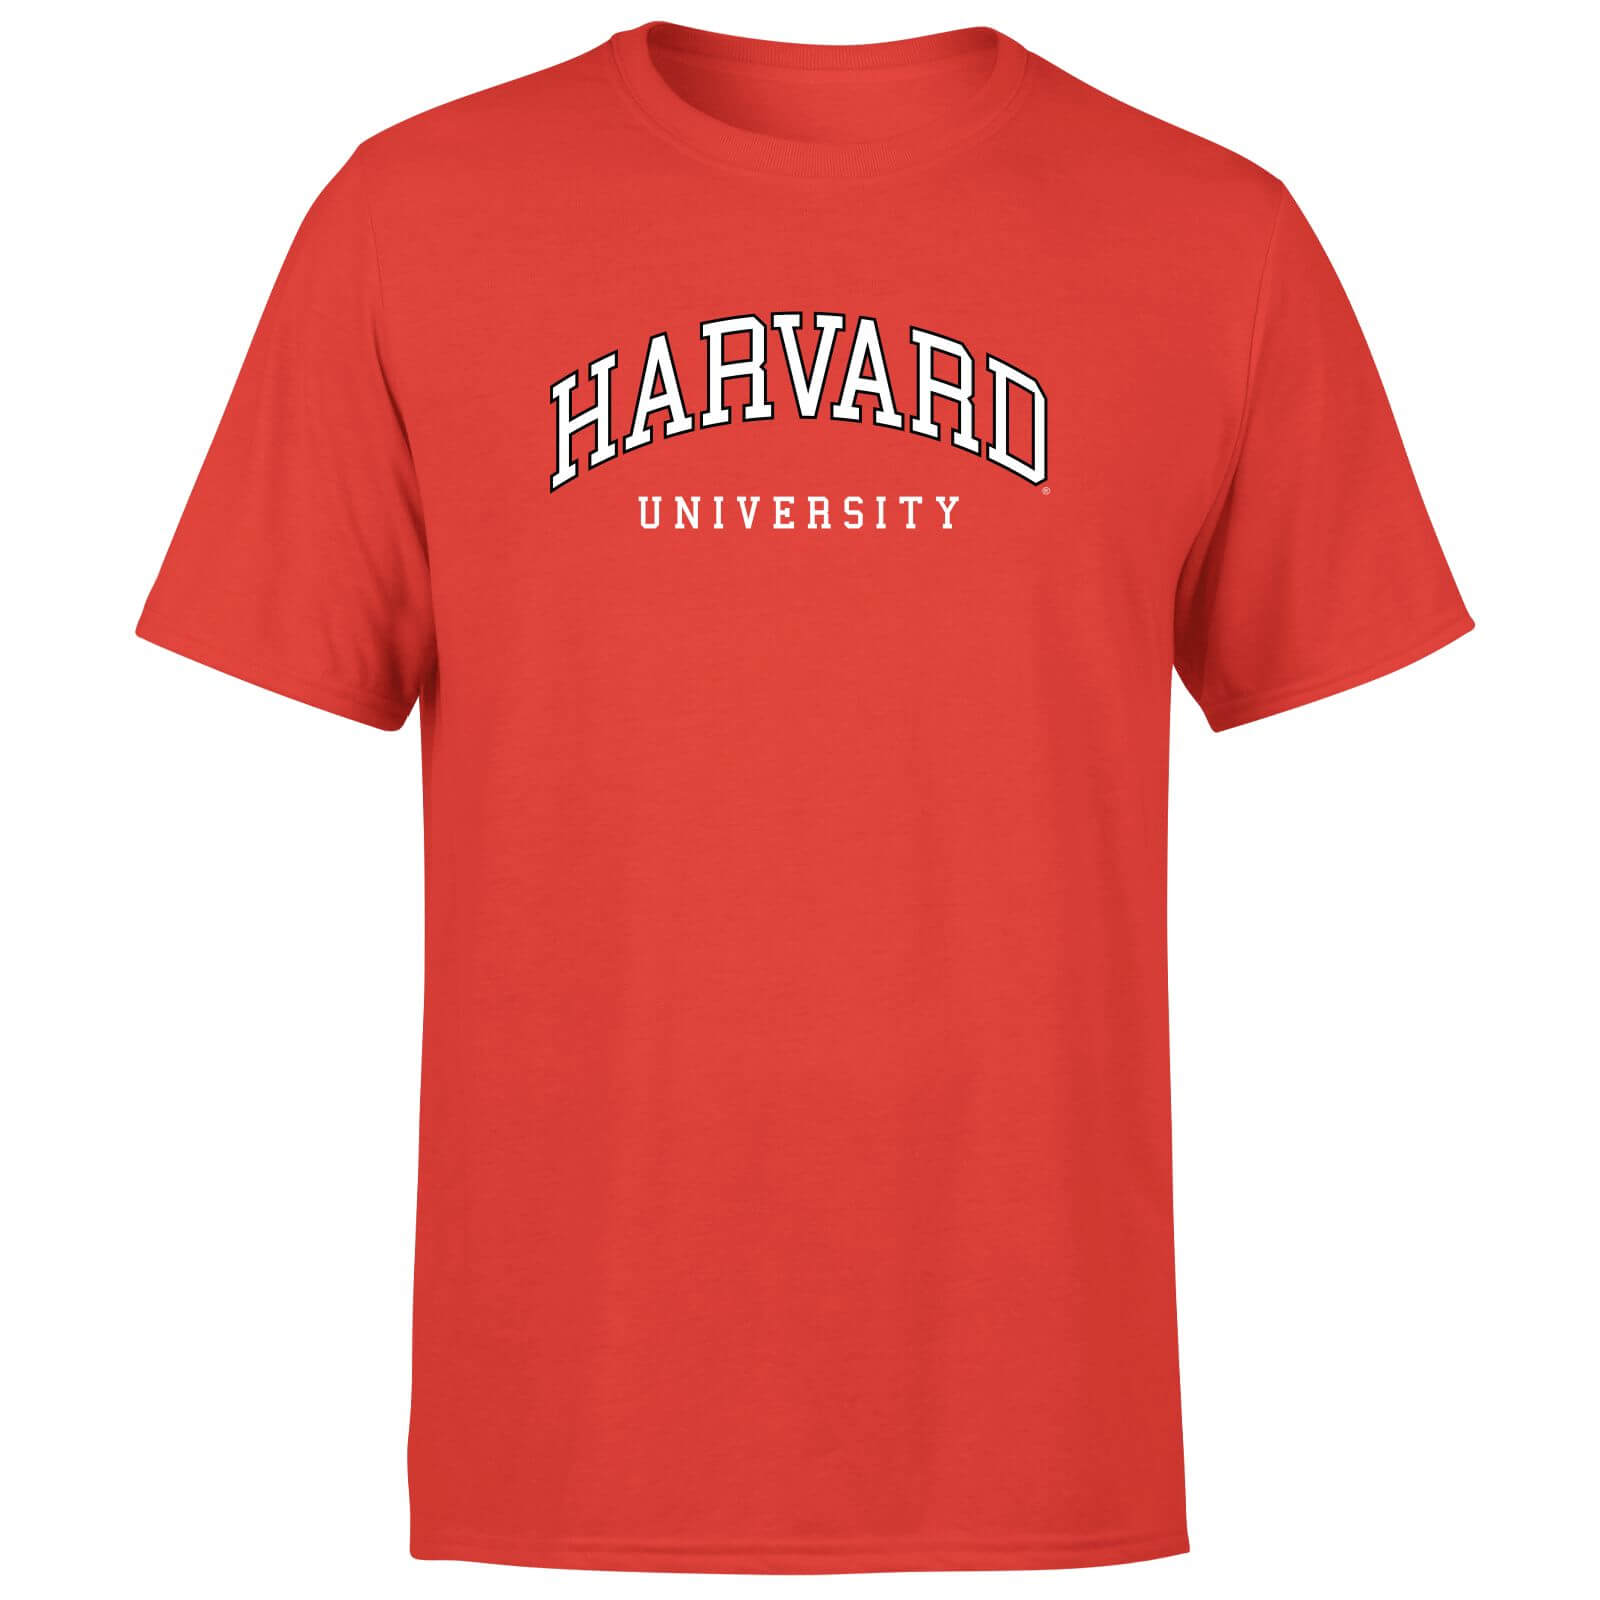 Harvard Red Tee Men's T-Shirt - Red - XS